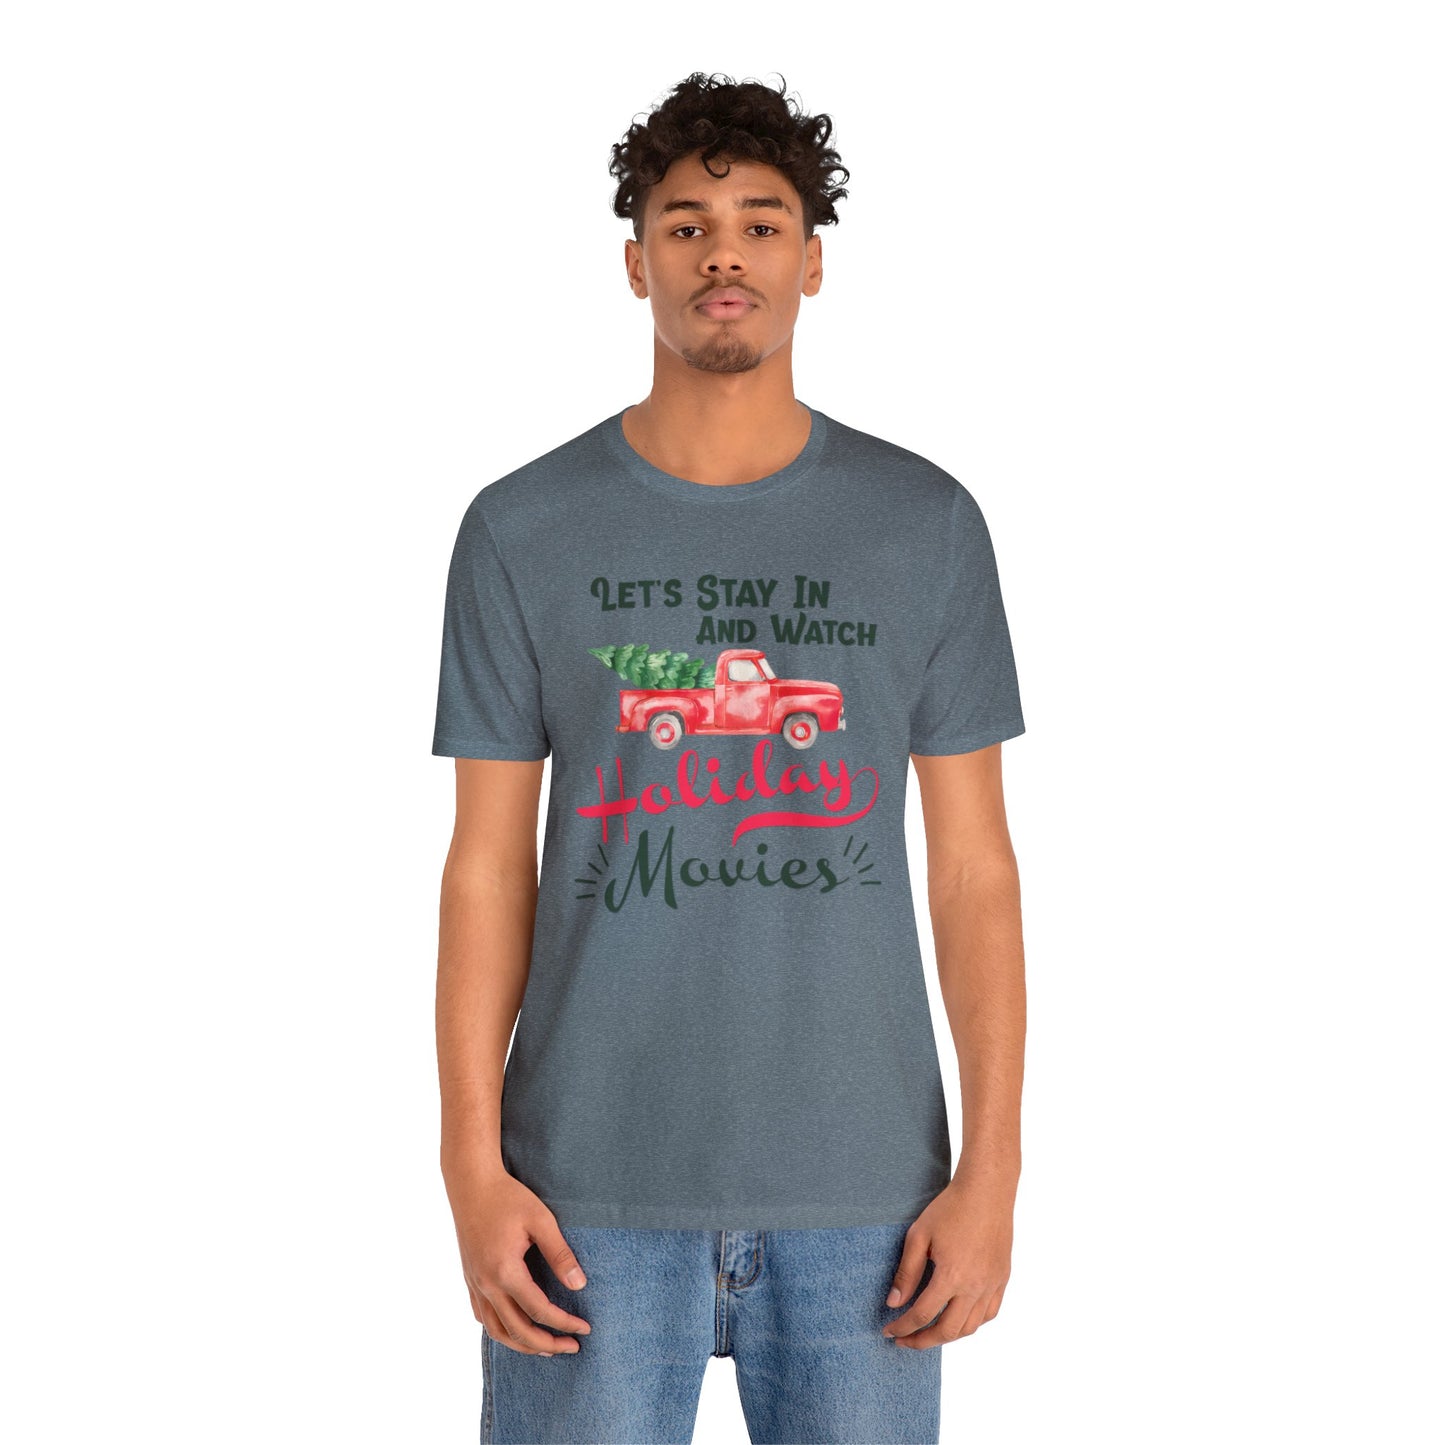 Holiday Movies - Jersey T-Shirt